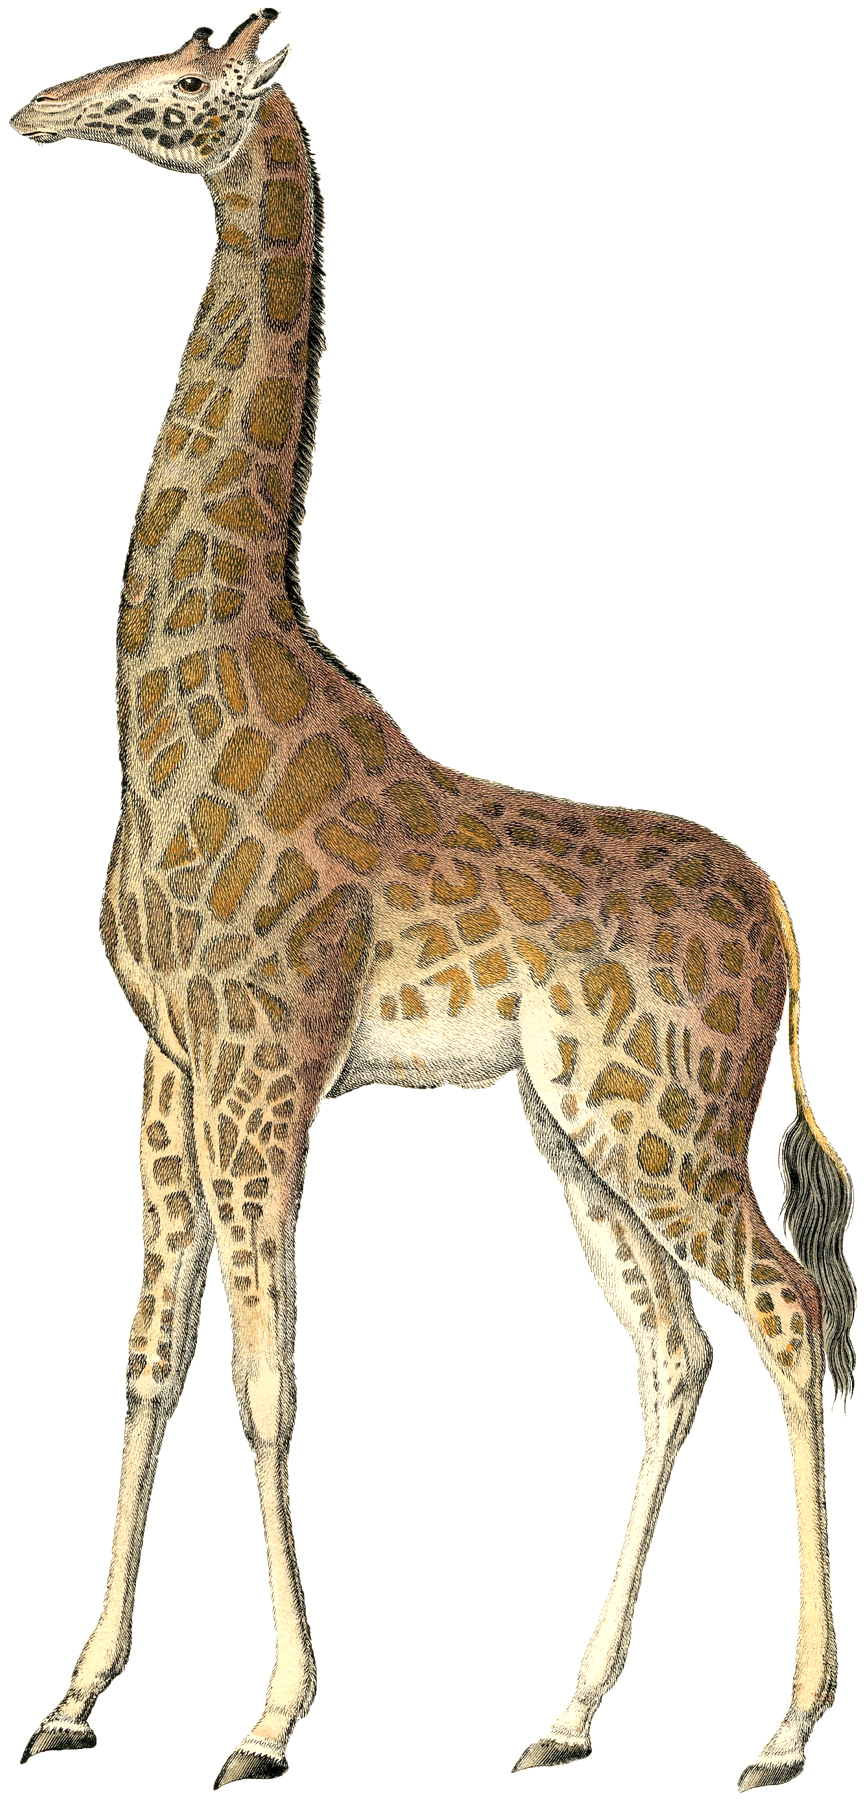 Vintage Giraffe Image